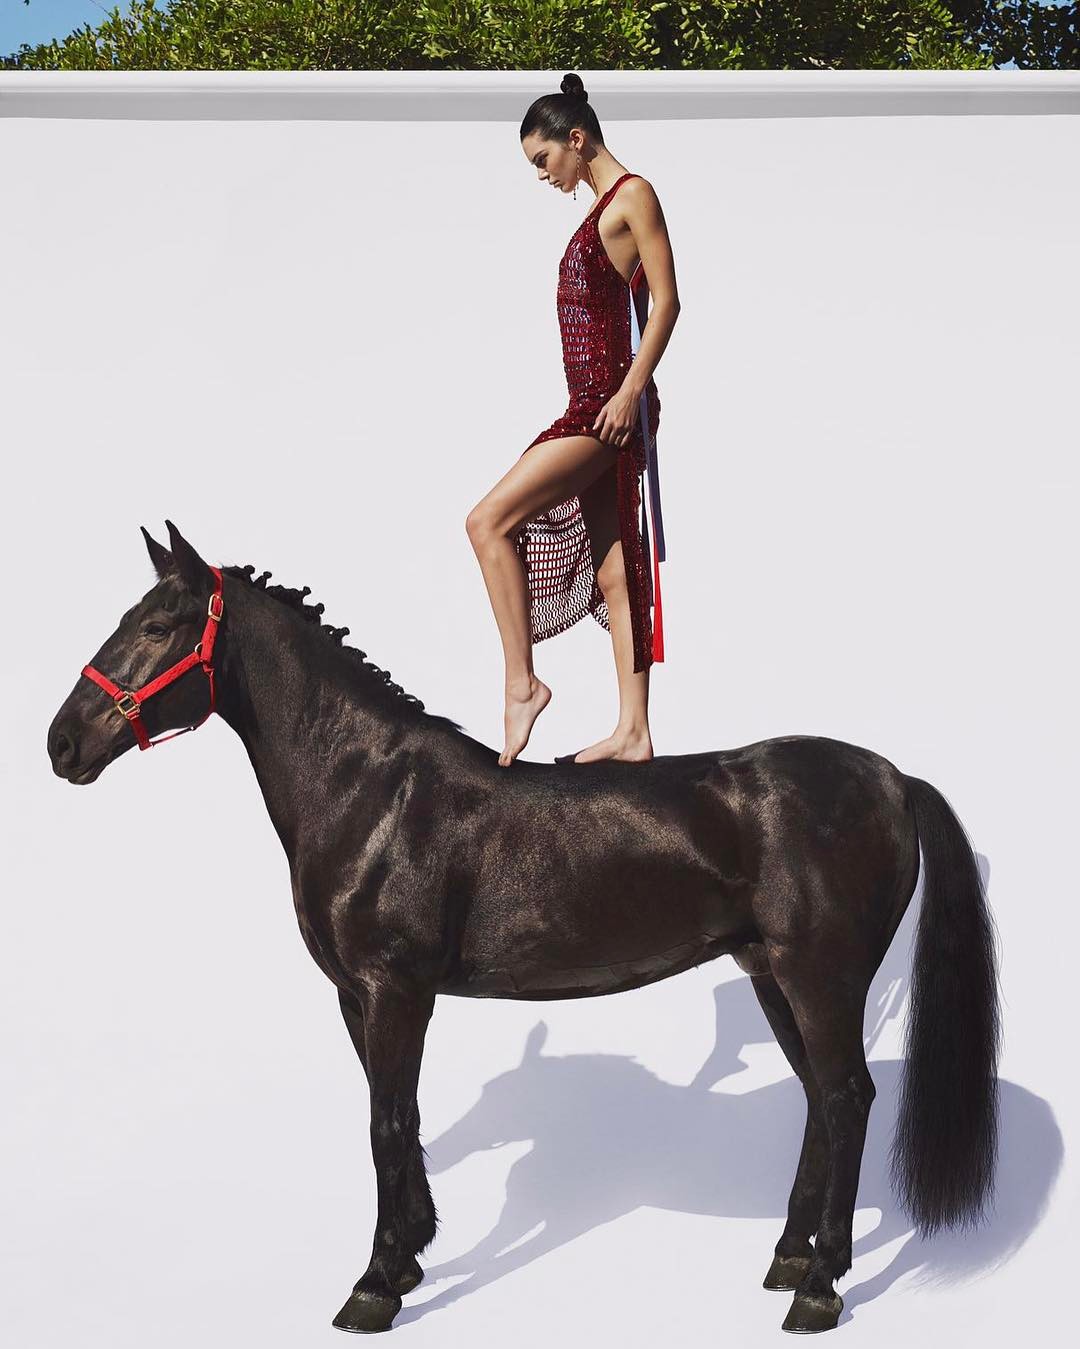 Kendall Jenner cưỡi ngựa